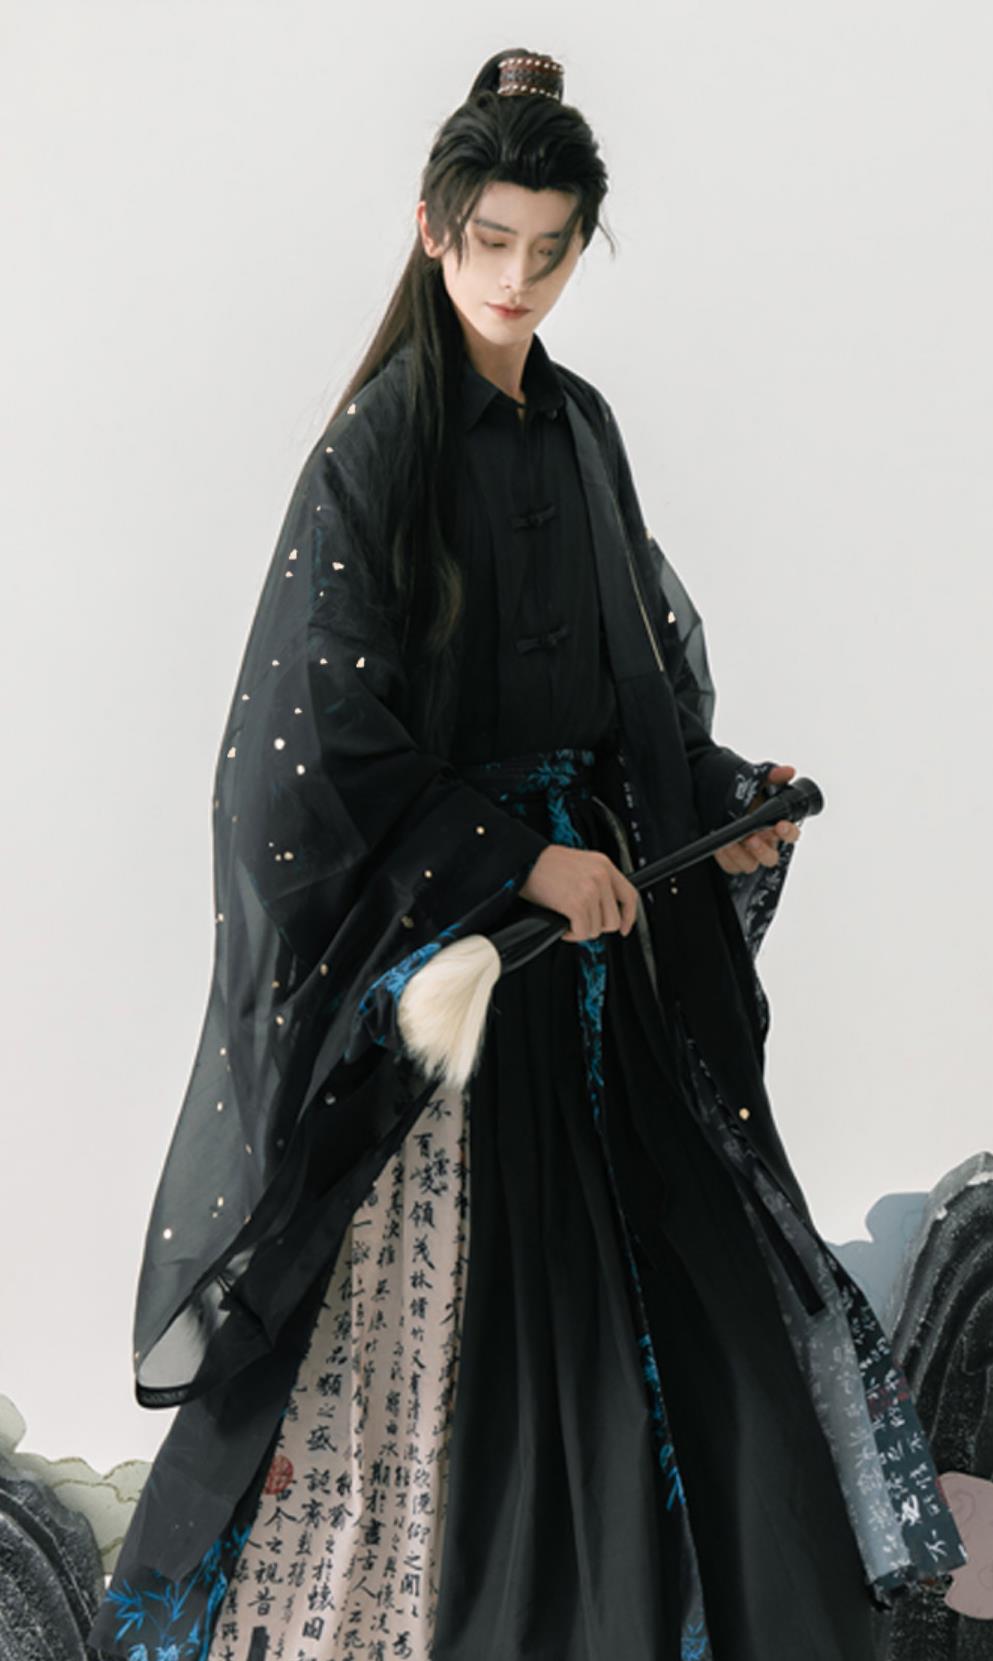 China Ming Dynasty Young Man Costume Traditional Hanfu Black Outfit Ancient China Wuxia Swordsman Clothing